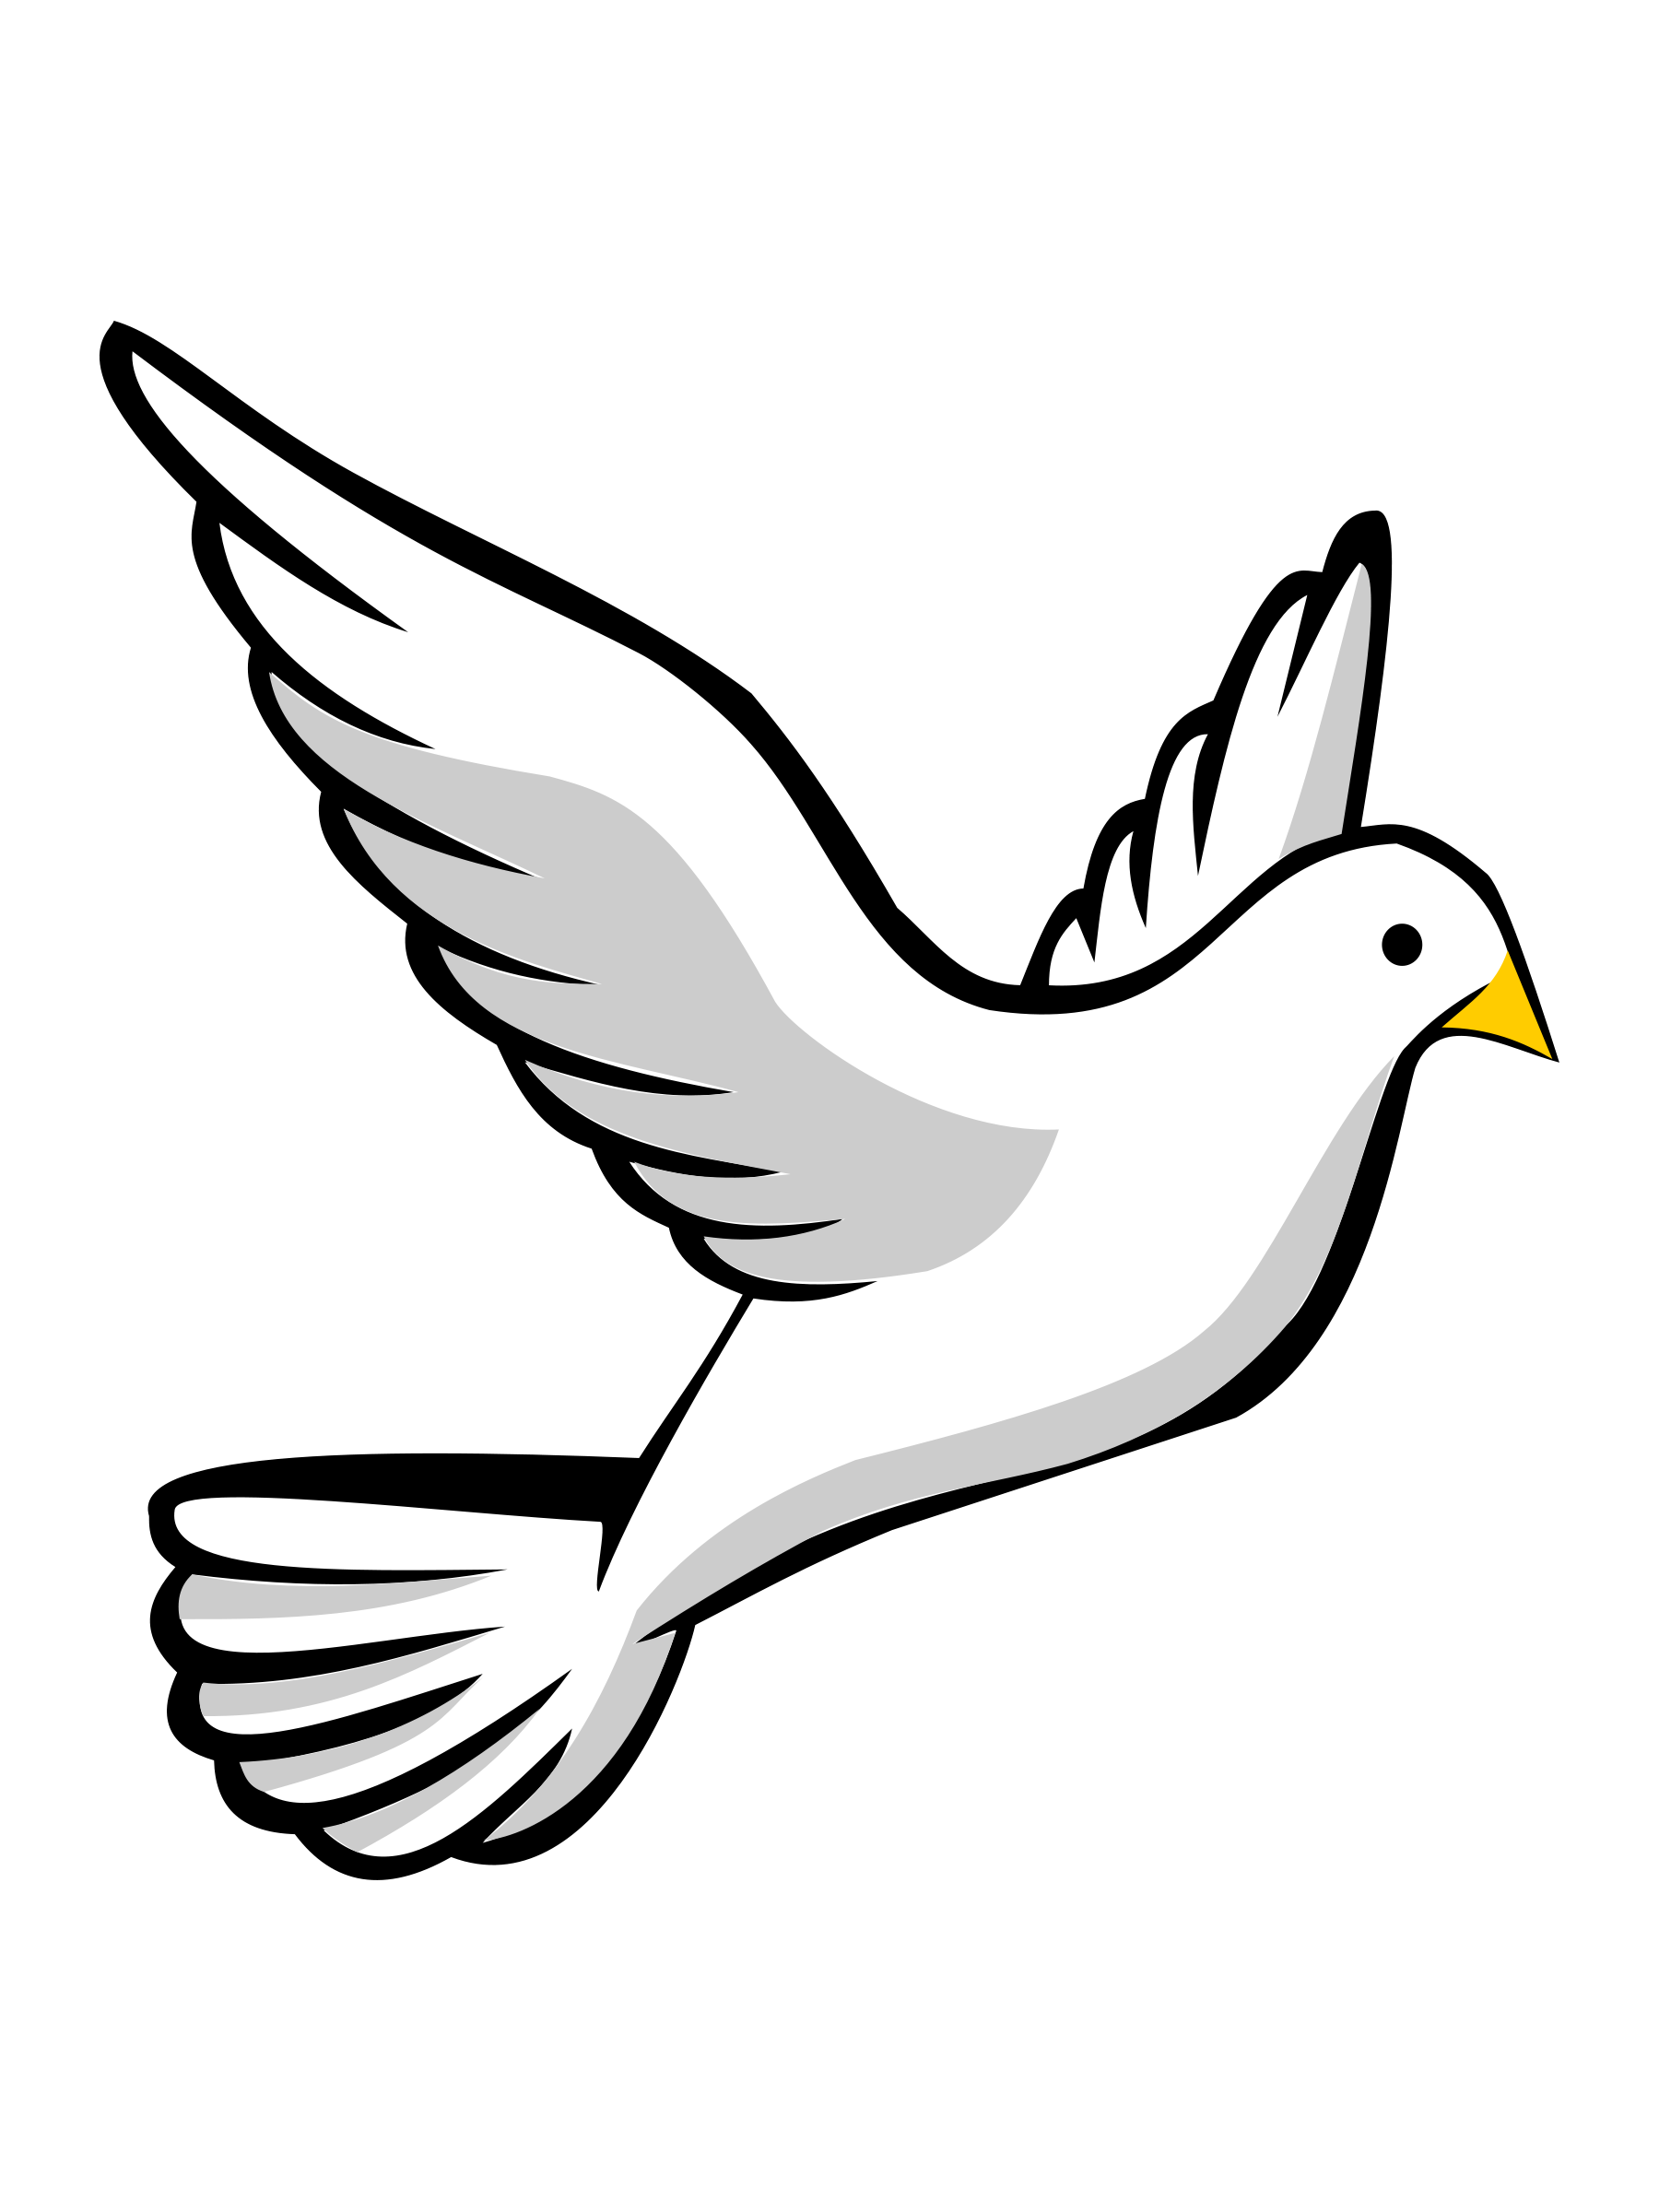 Holy spirit dove clip art holy spirit dove pictures free - Clipartix